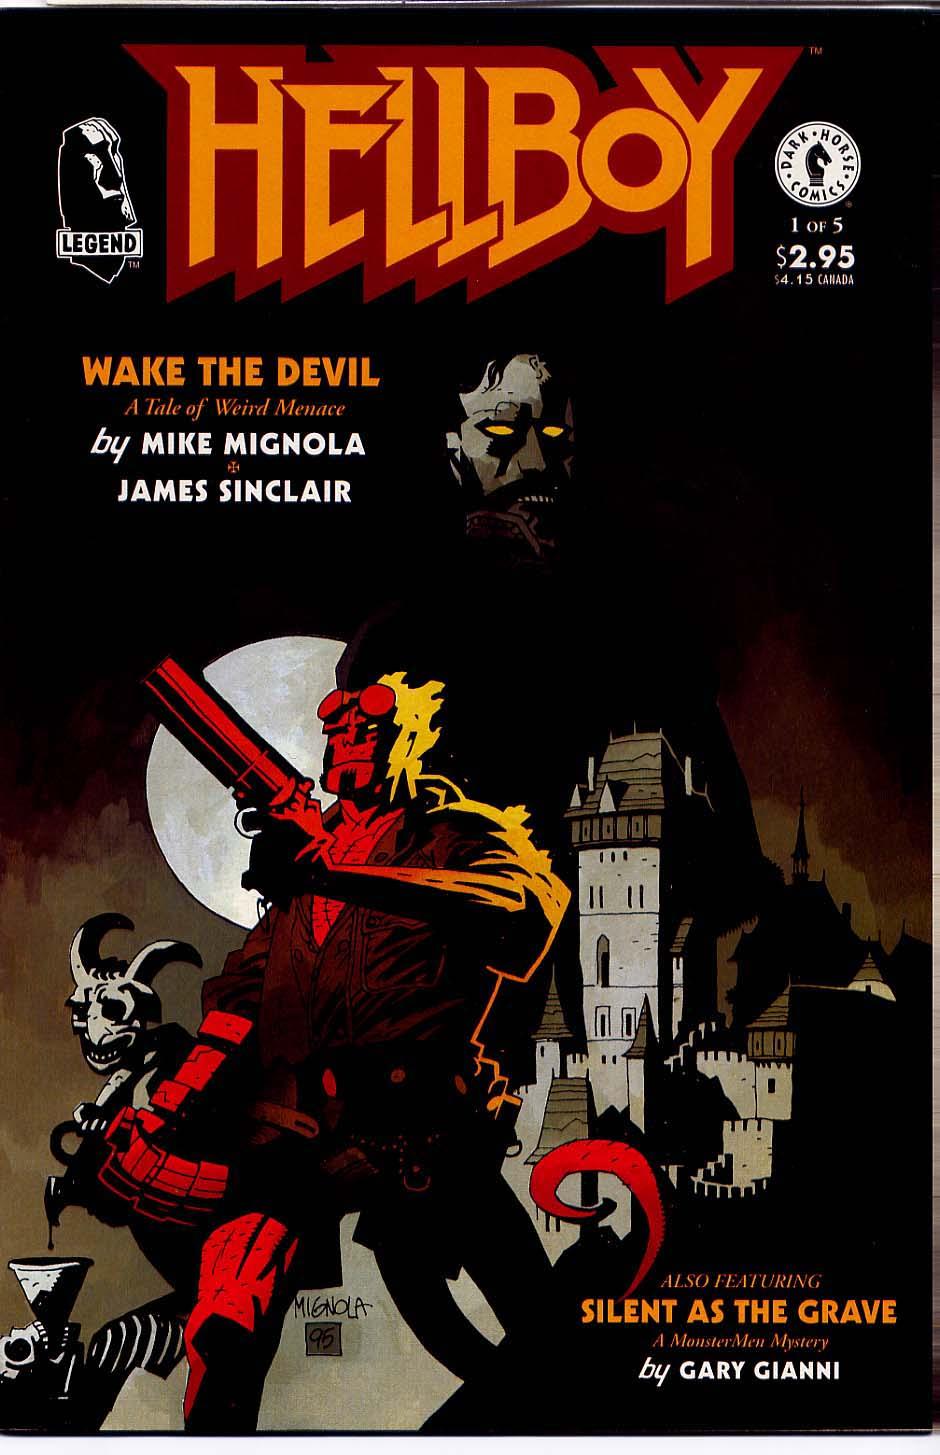 Hellboy: Wake the Devil Vol. 1 #1